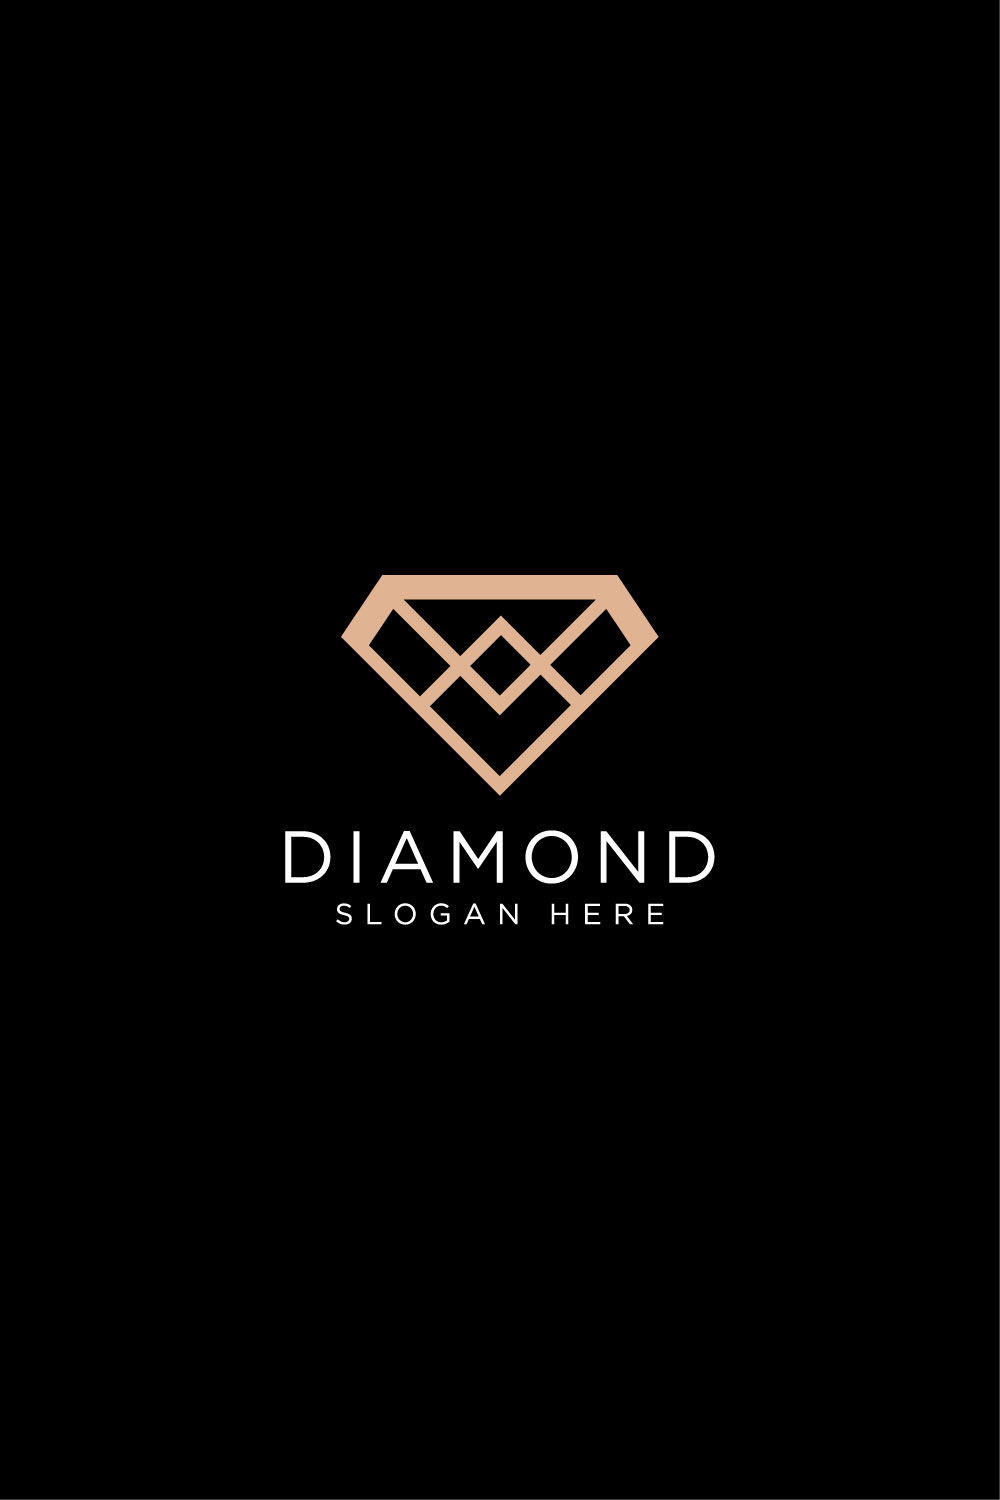 diamond shape logo design vector | MasterBundles